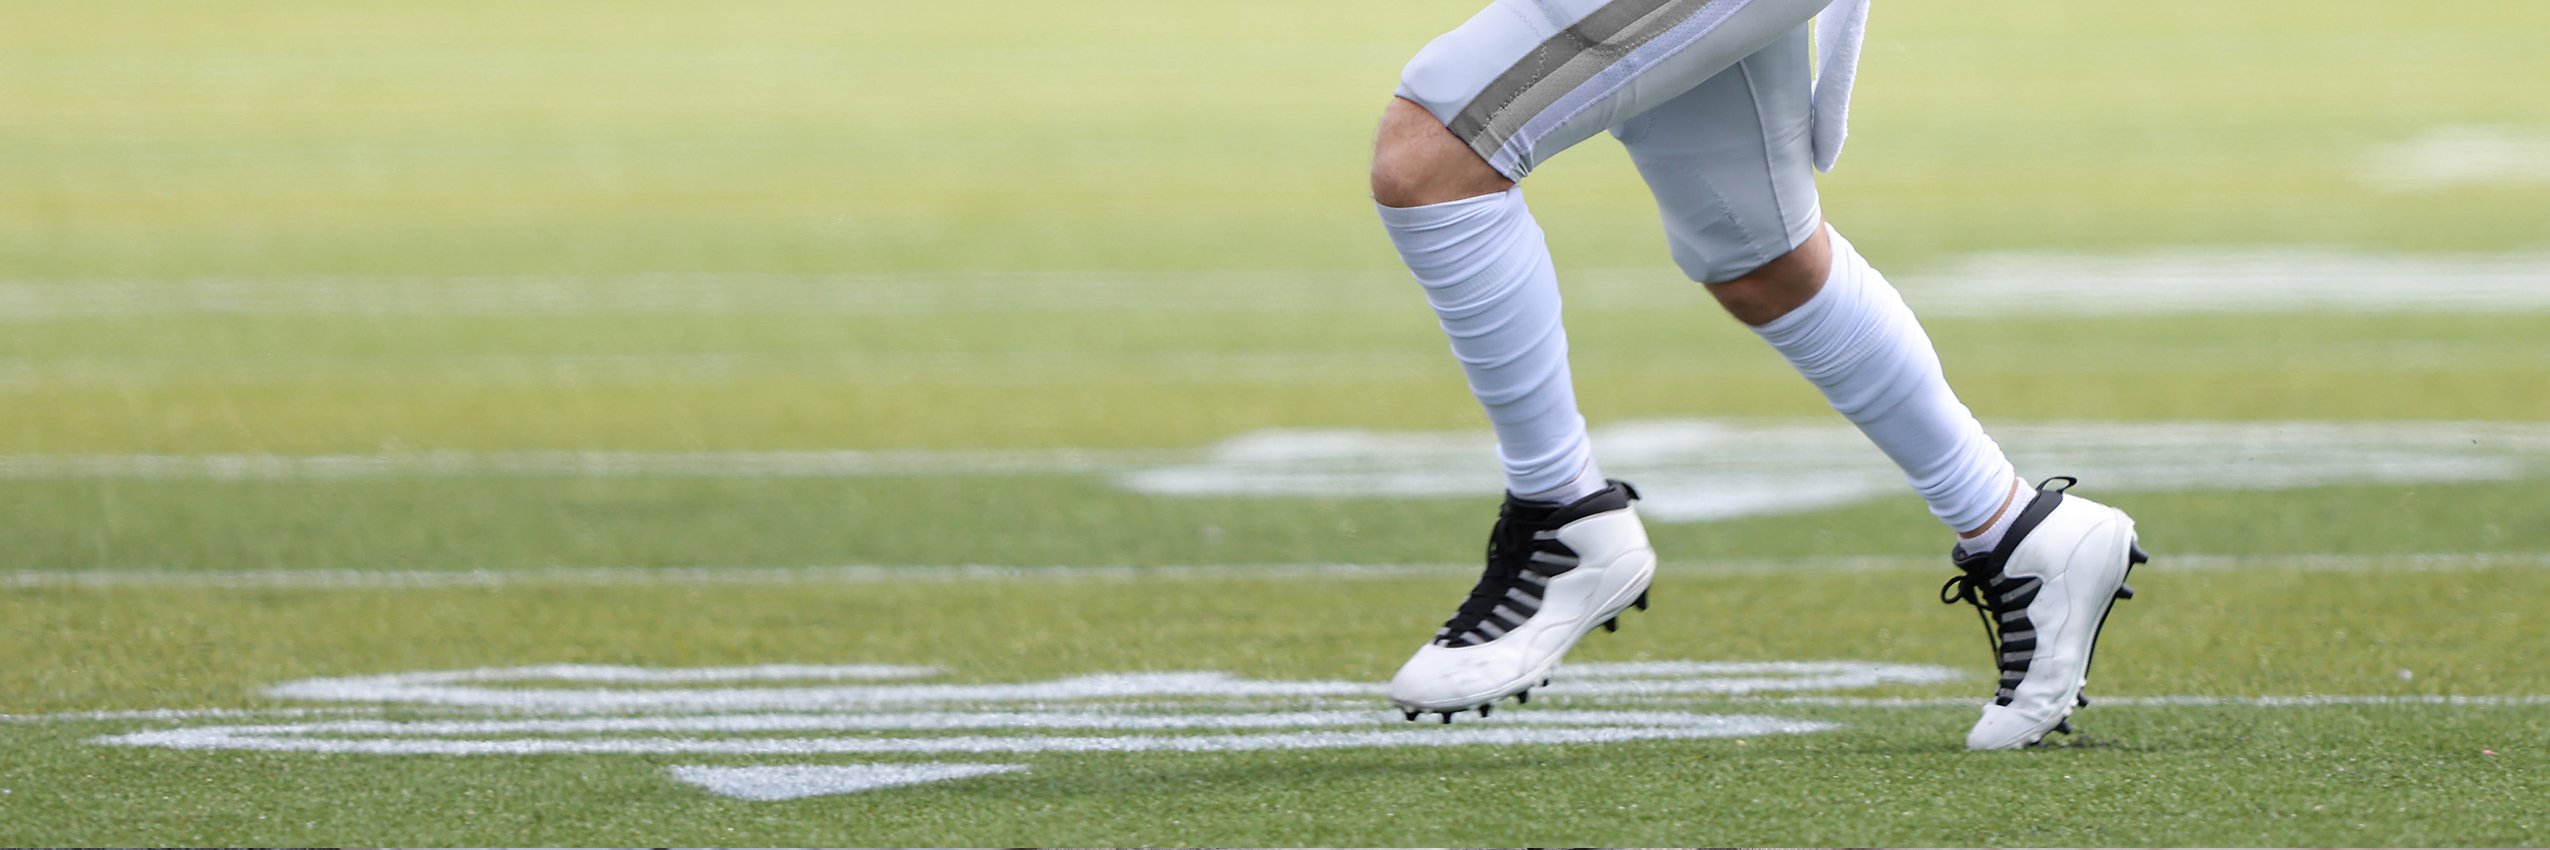 Drymax Sports - Sanitary Tube Sock / Leg Sleeve - Football/Lacrosse